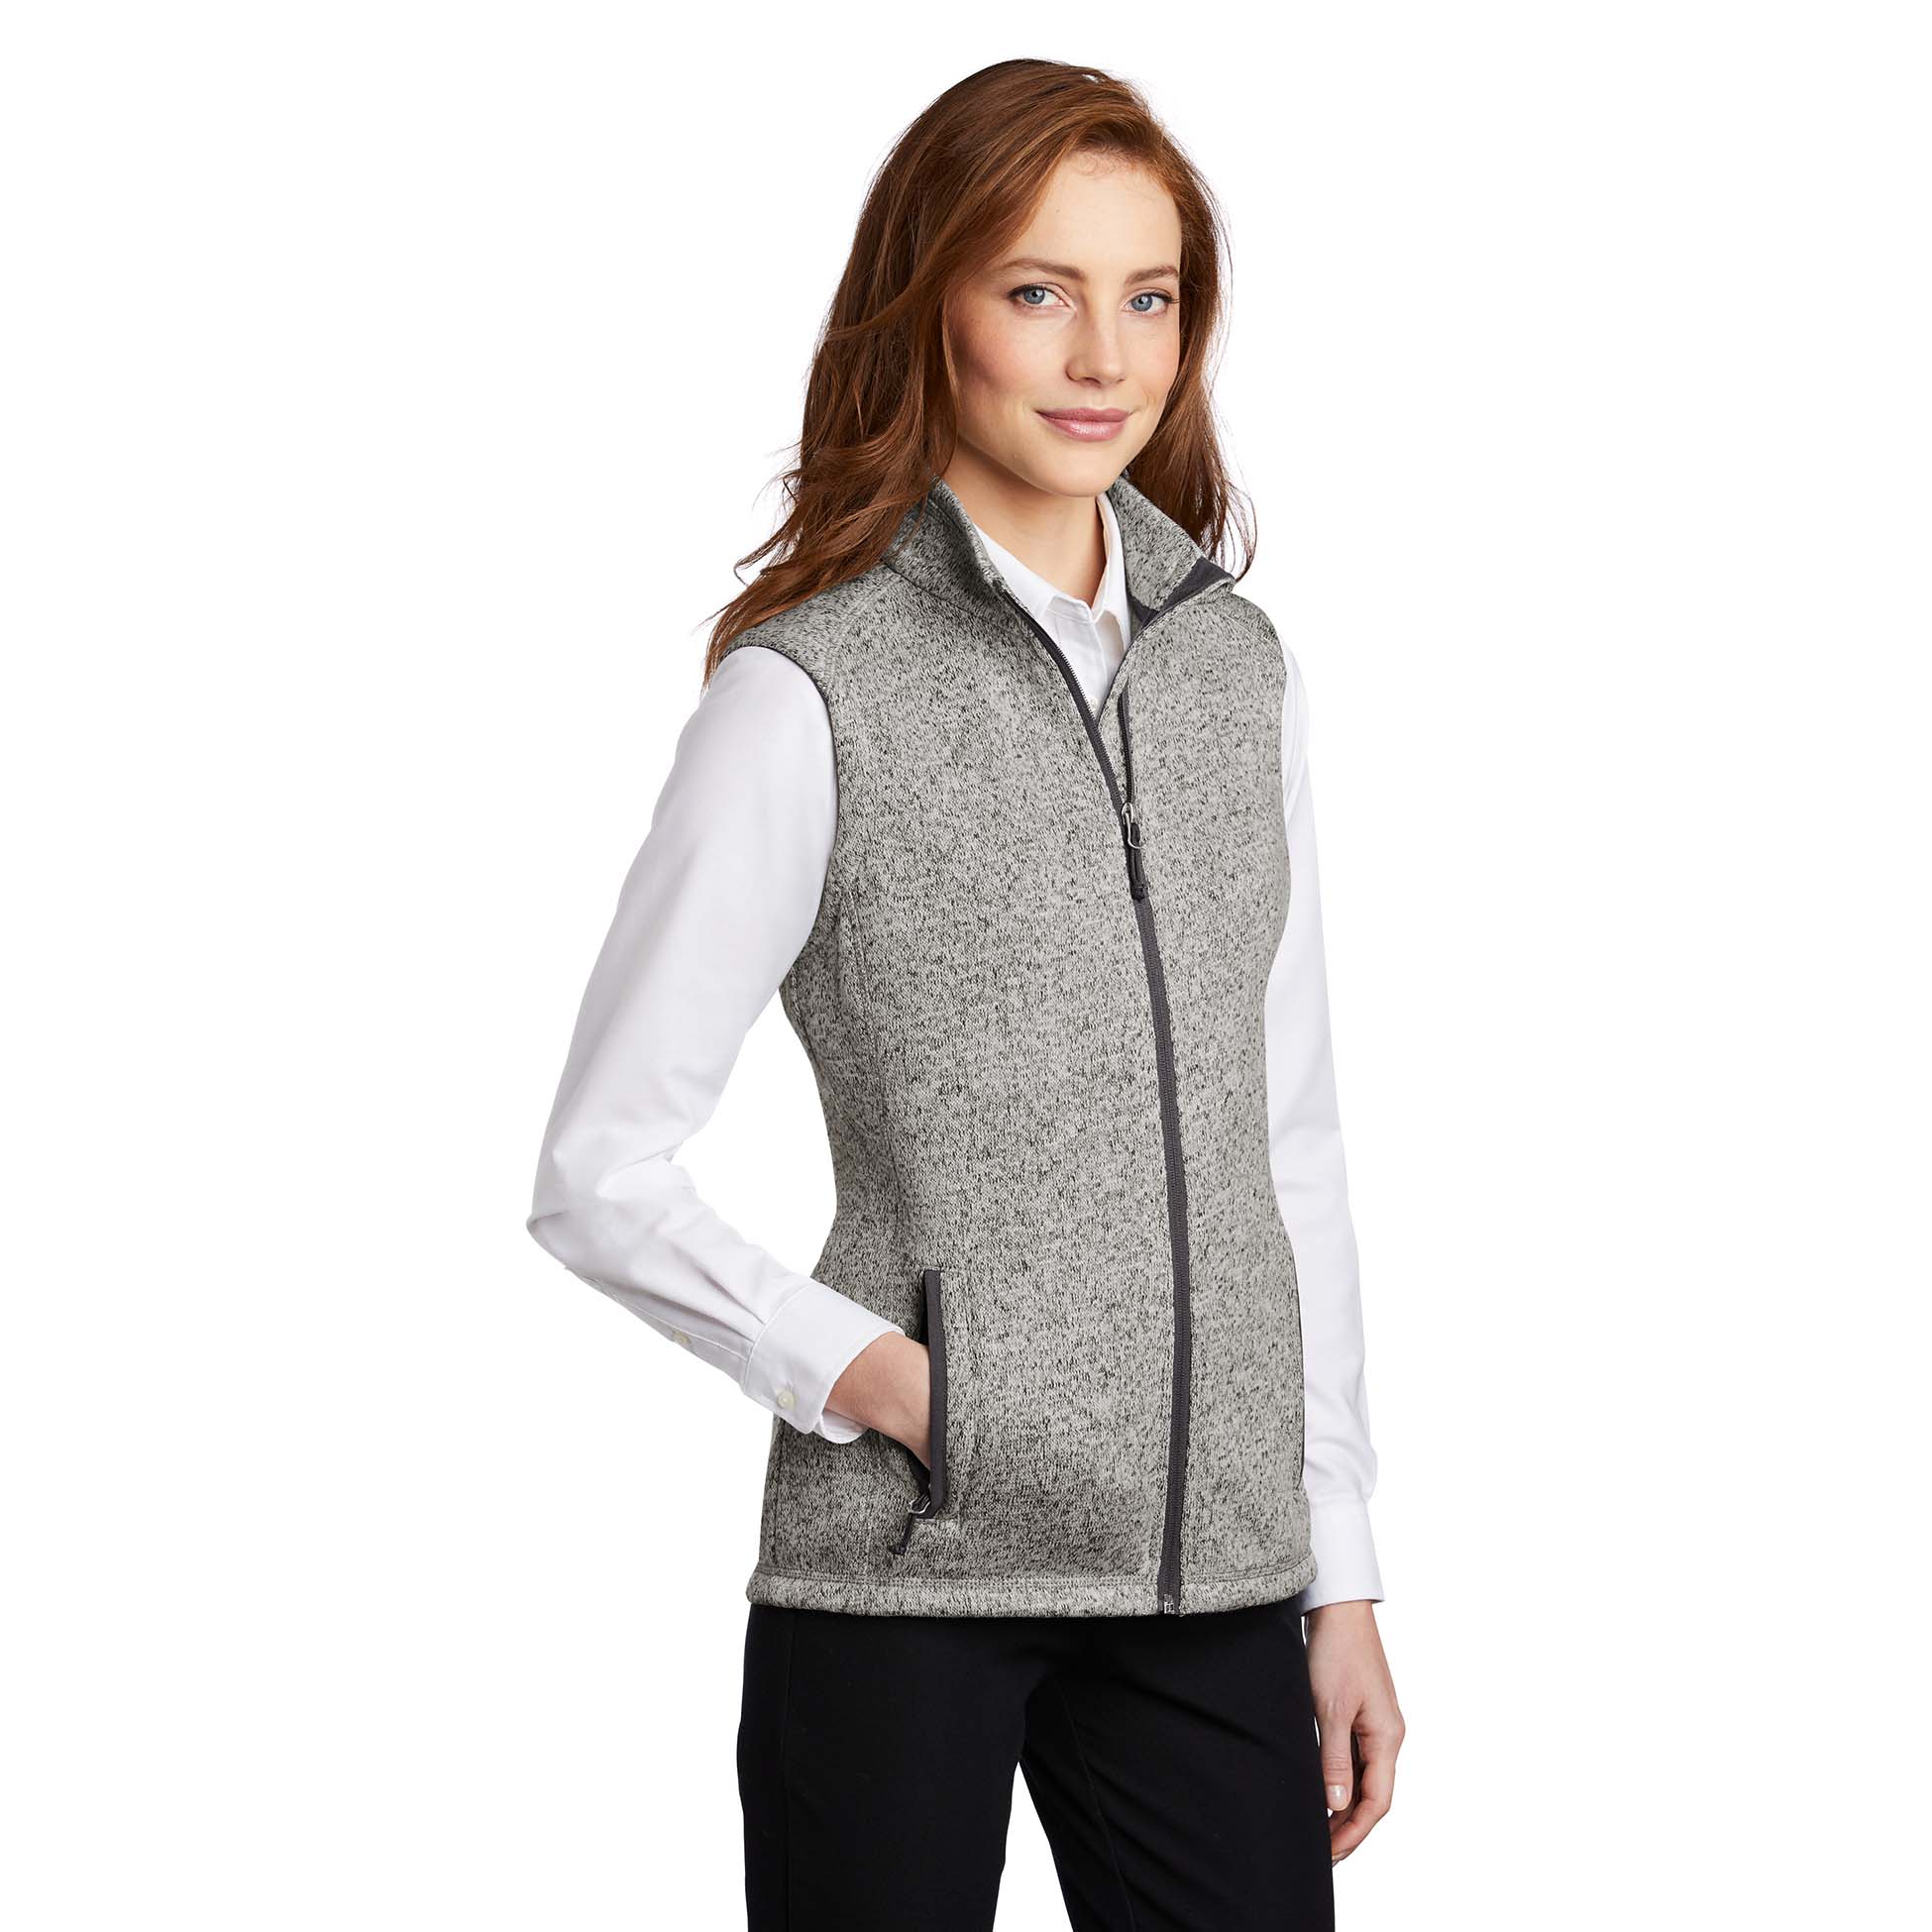 Port Authority Ladies Sweater Fleece Customized Jackets, Grey Heather